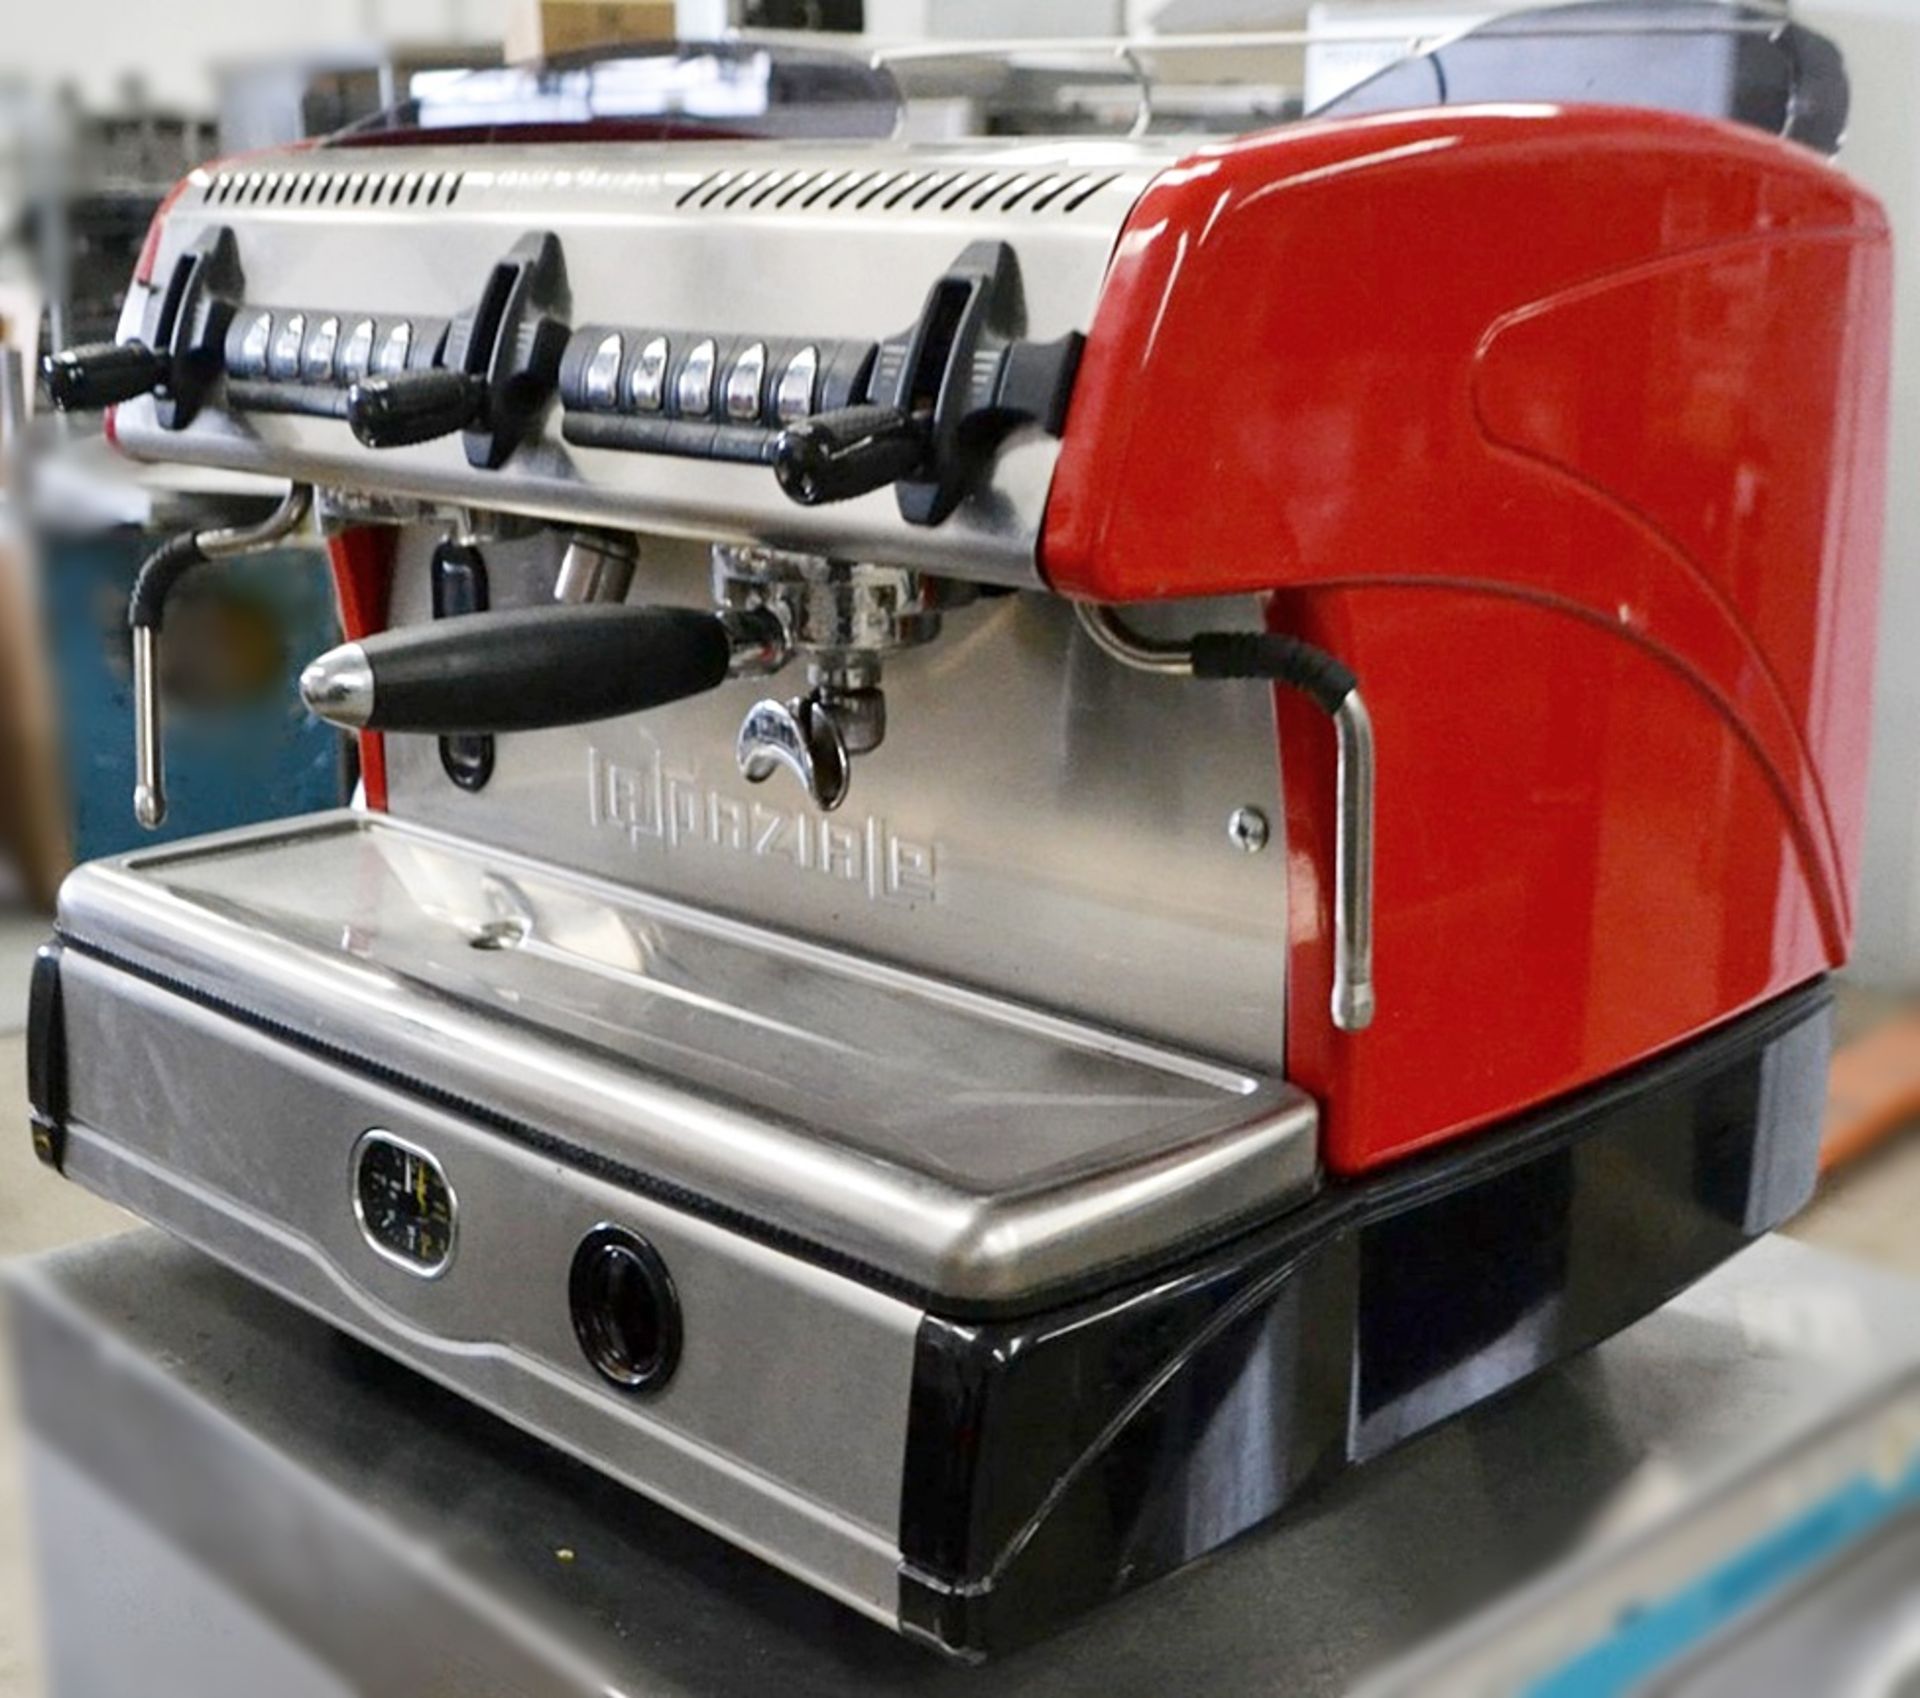 1 x La Spaziale EK2 Compact 2 Group Espresso Coffee Machine - Bright Red Finish - CL350 - Ref210